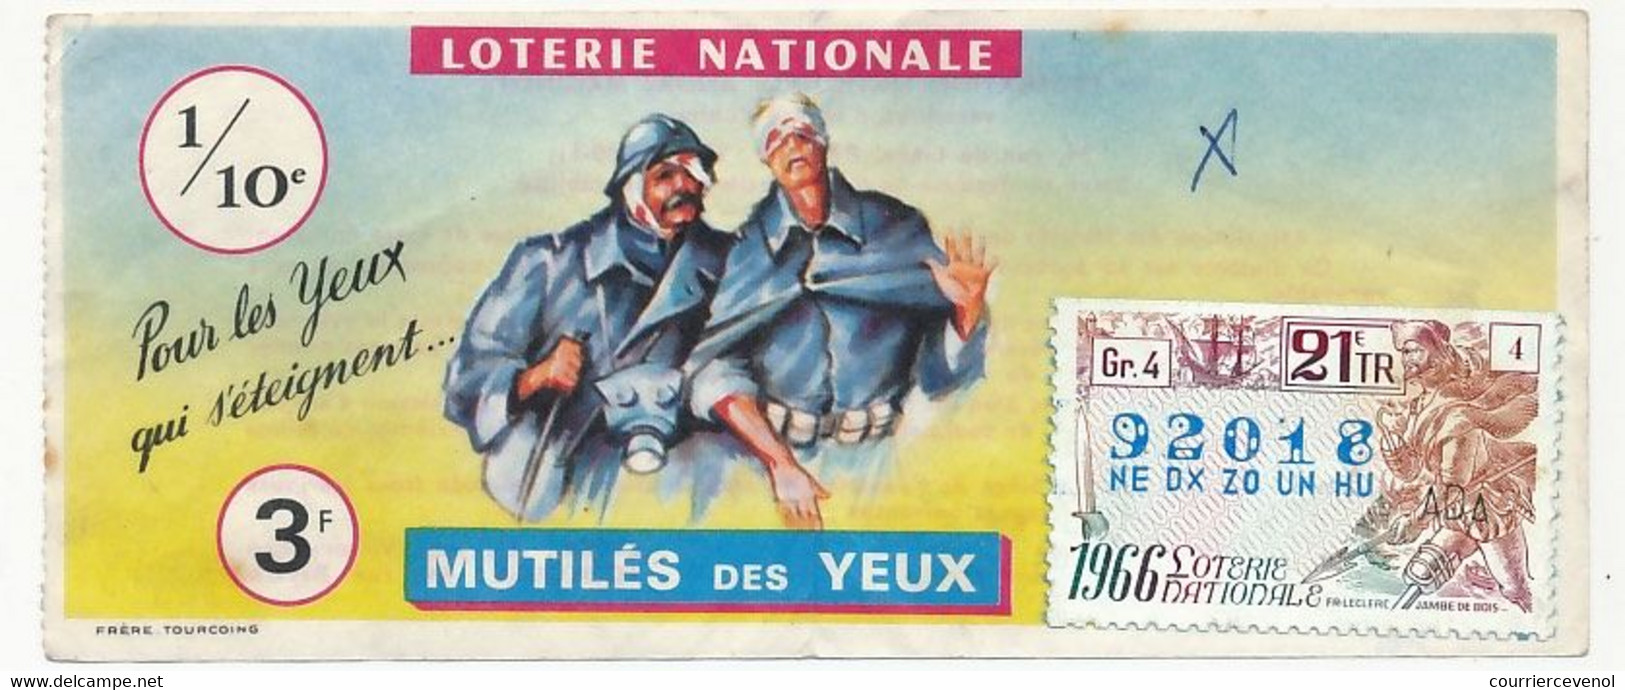 FRANCE - Loterie Nationale - 1/10ème - Mutilés Des Yeux - 21eme Tranche 1966 - Biglietti Della Lotteria